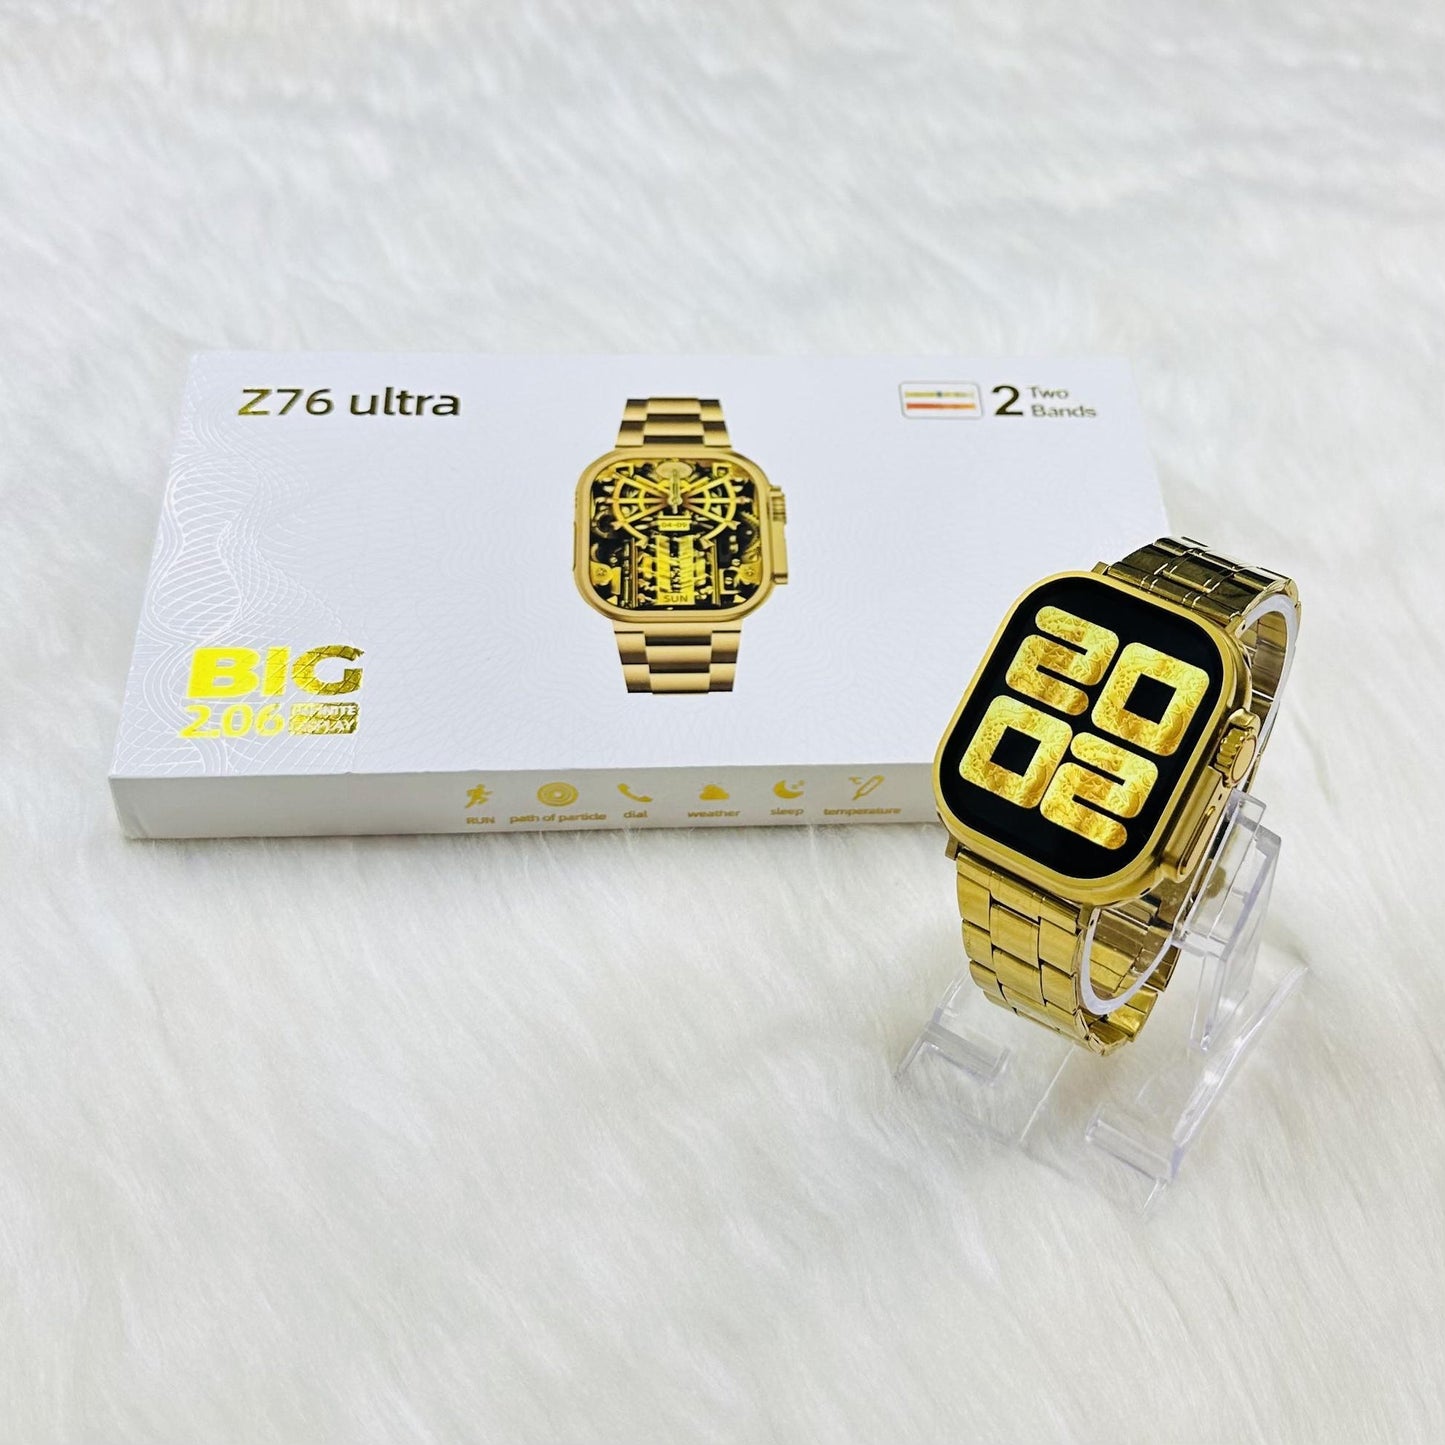 Latest Gold Edition Z76 Ultra (2-Straps)